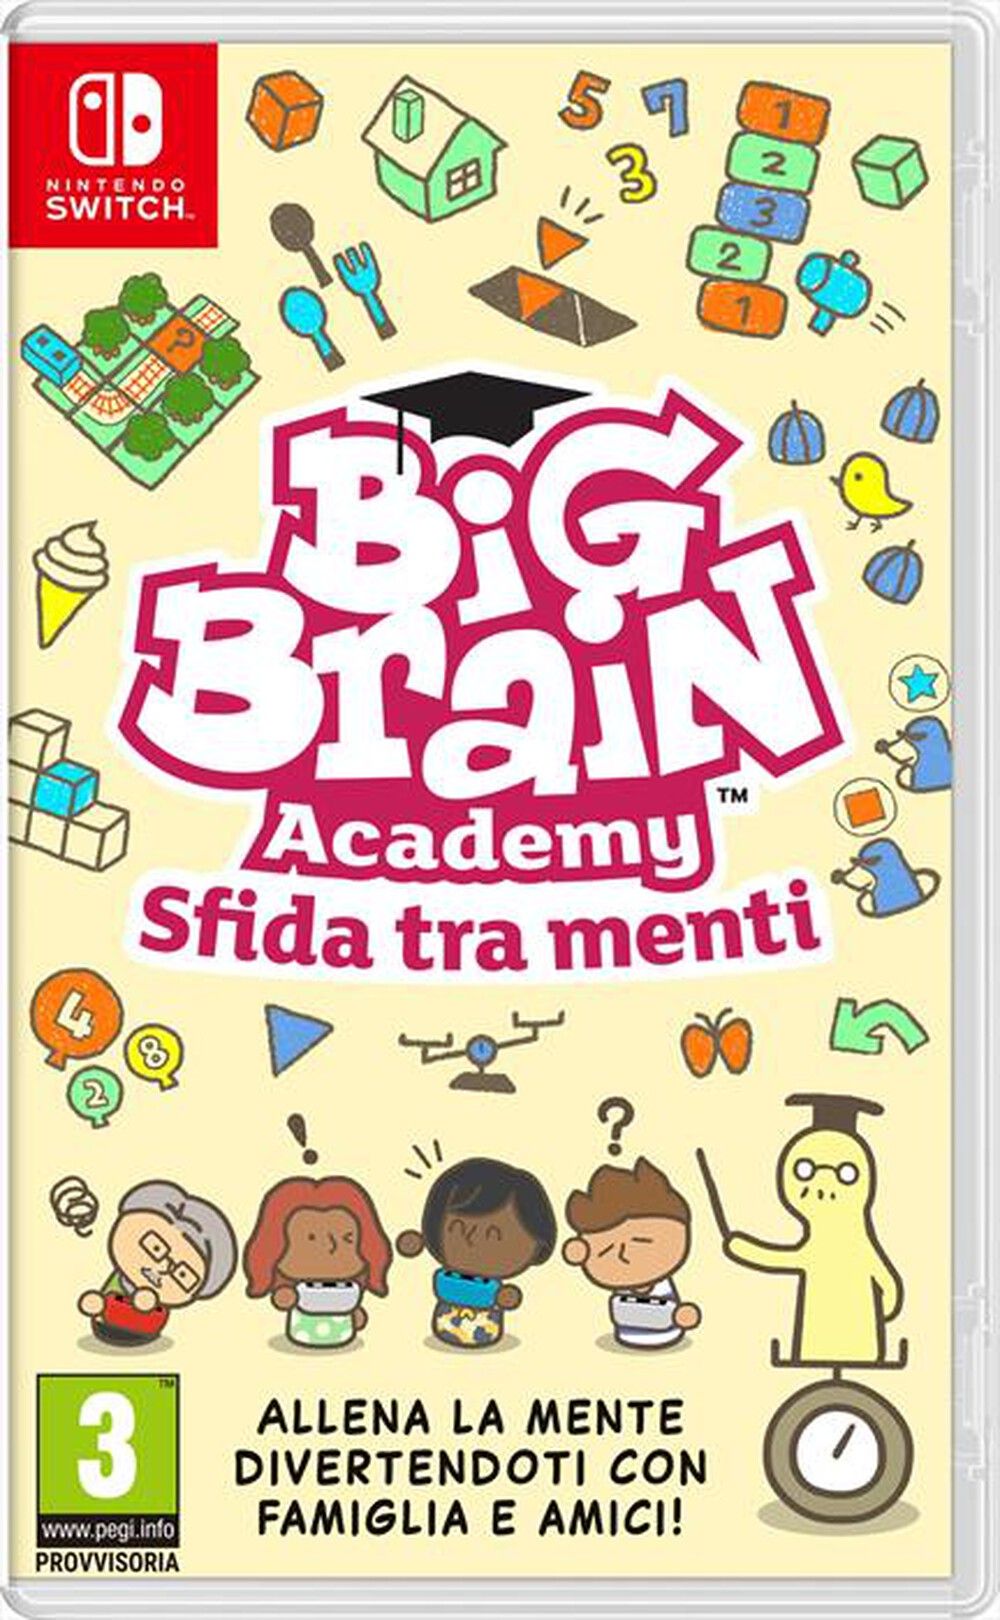 Nintendo Big Brain Acad.brain